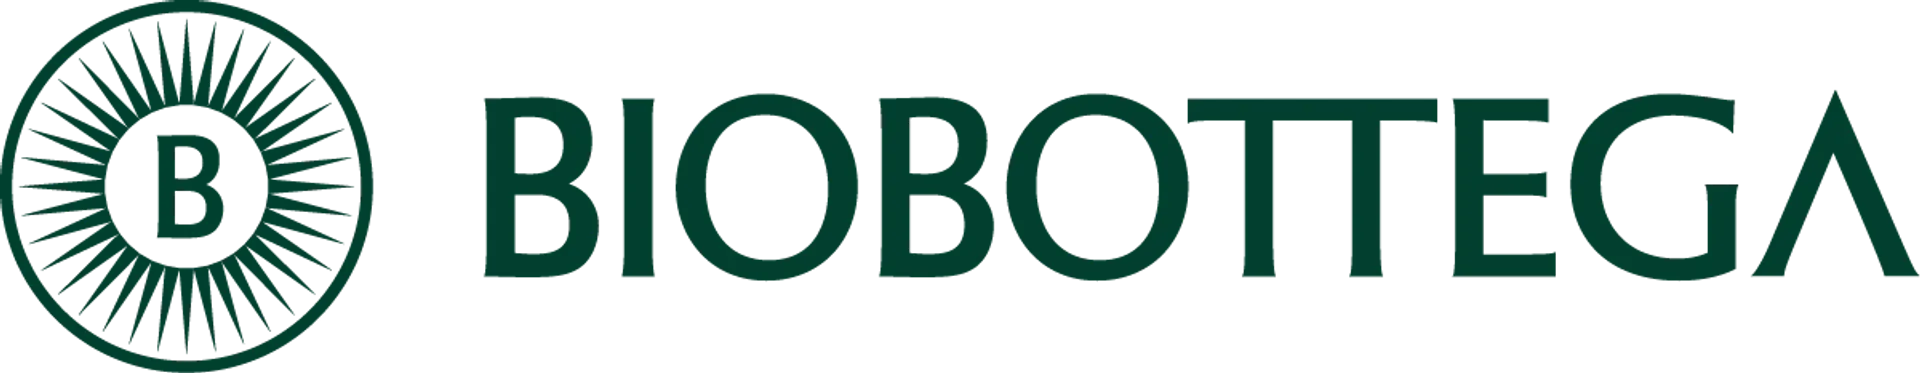 BIOBOTTEGA logo